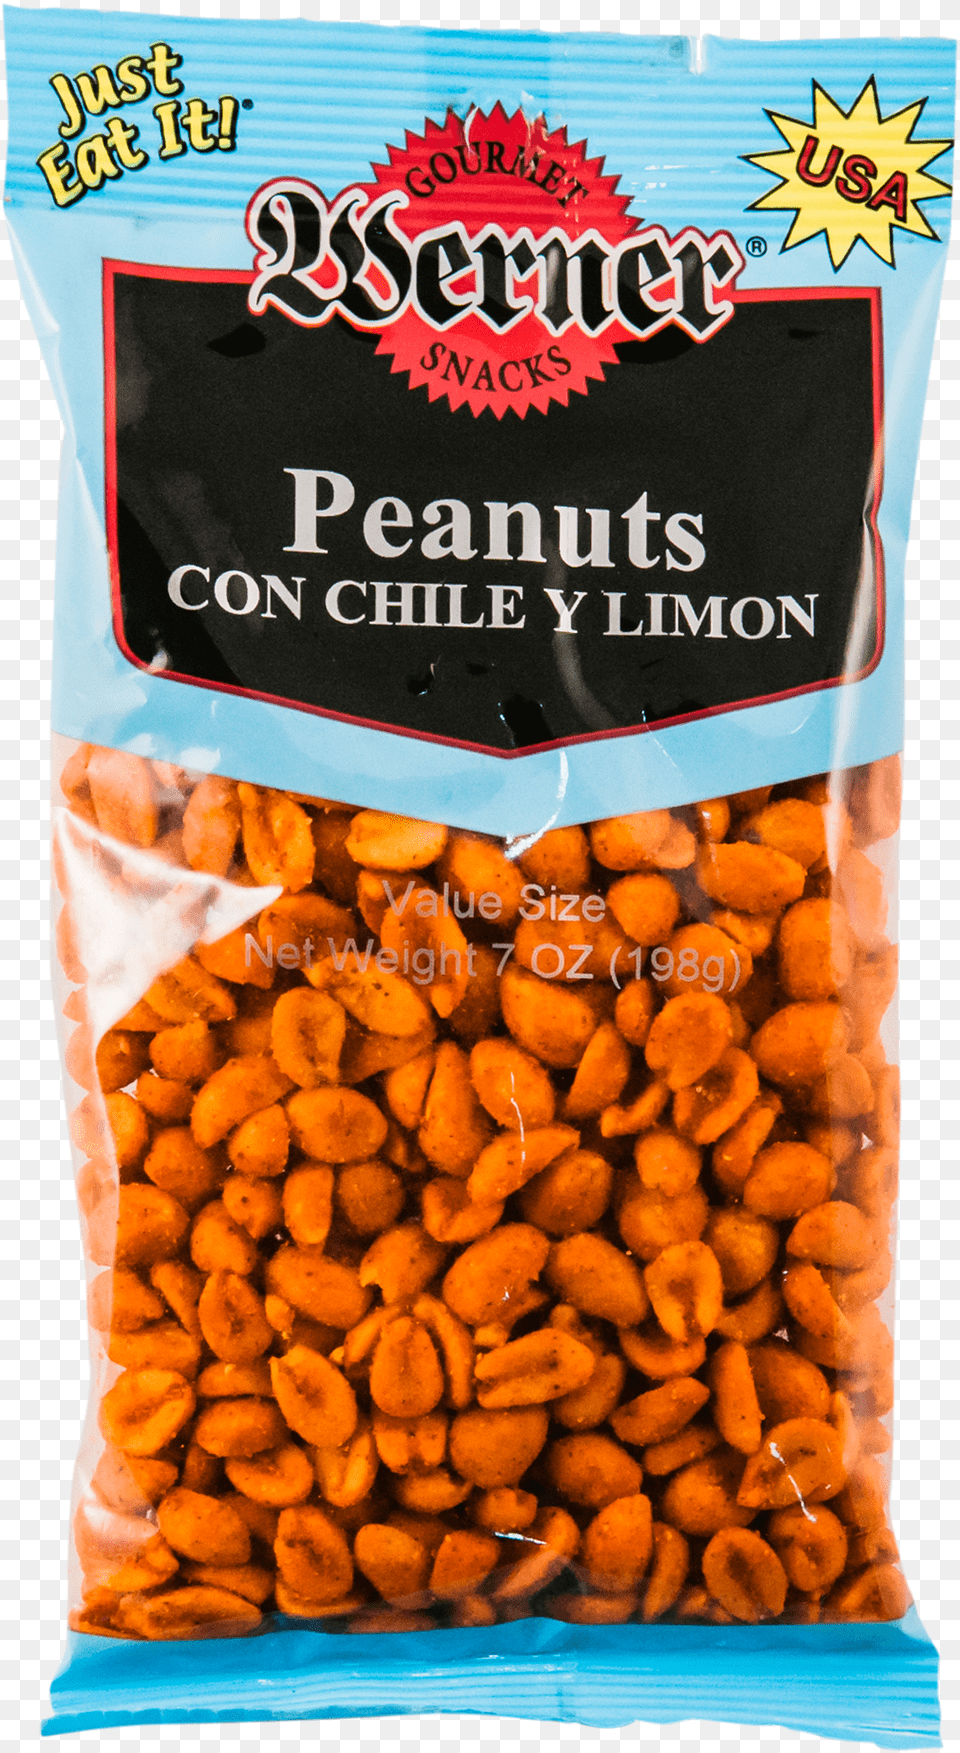 Peanuts Con Chile Y Limonclass Chile Y Limon Peanuts, Food, Produce, Nut, Plant Free Transparent Png